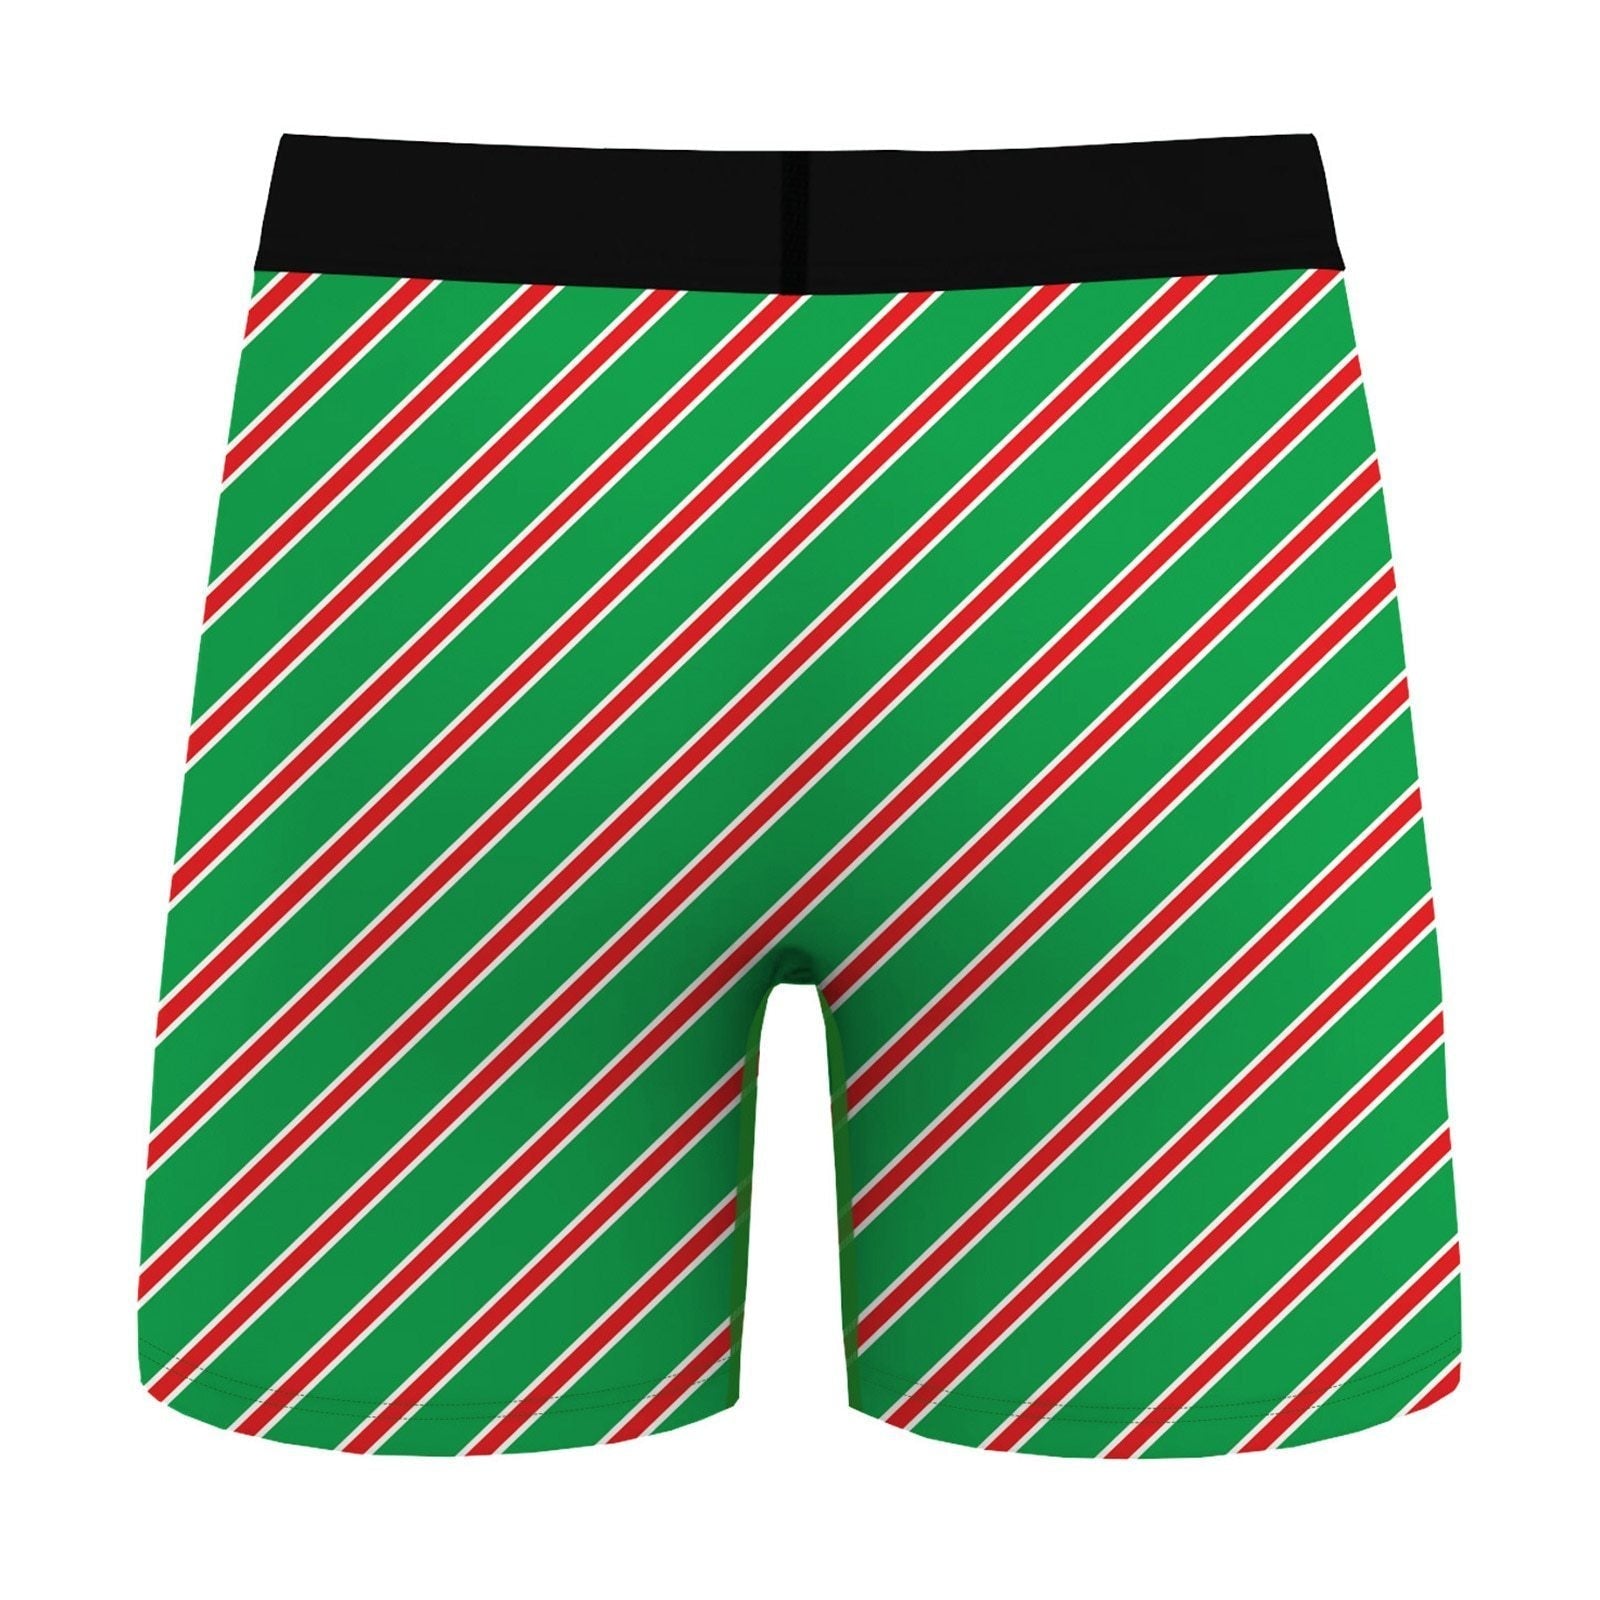 SALE - XMAS GIFT - Mens Christmas Naughty Santa Boxer Shorts with Open